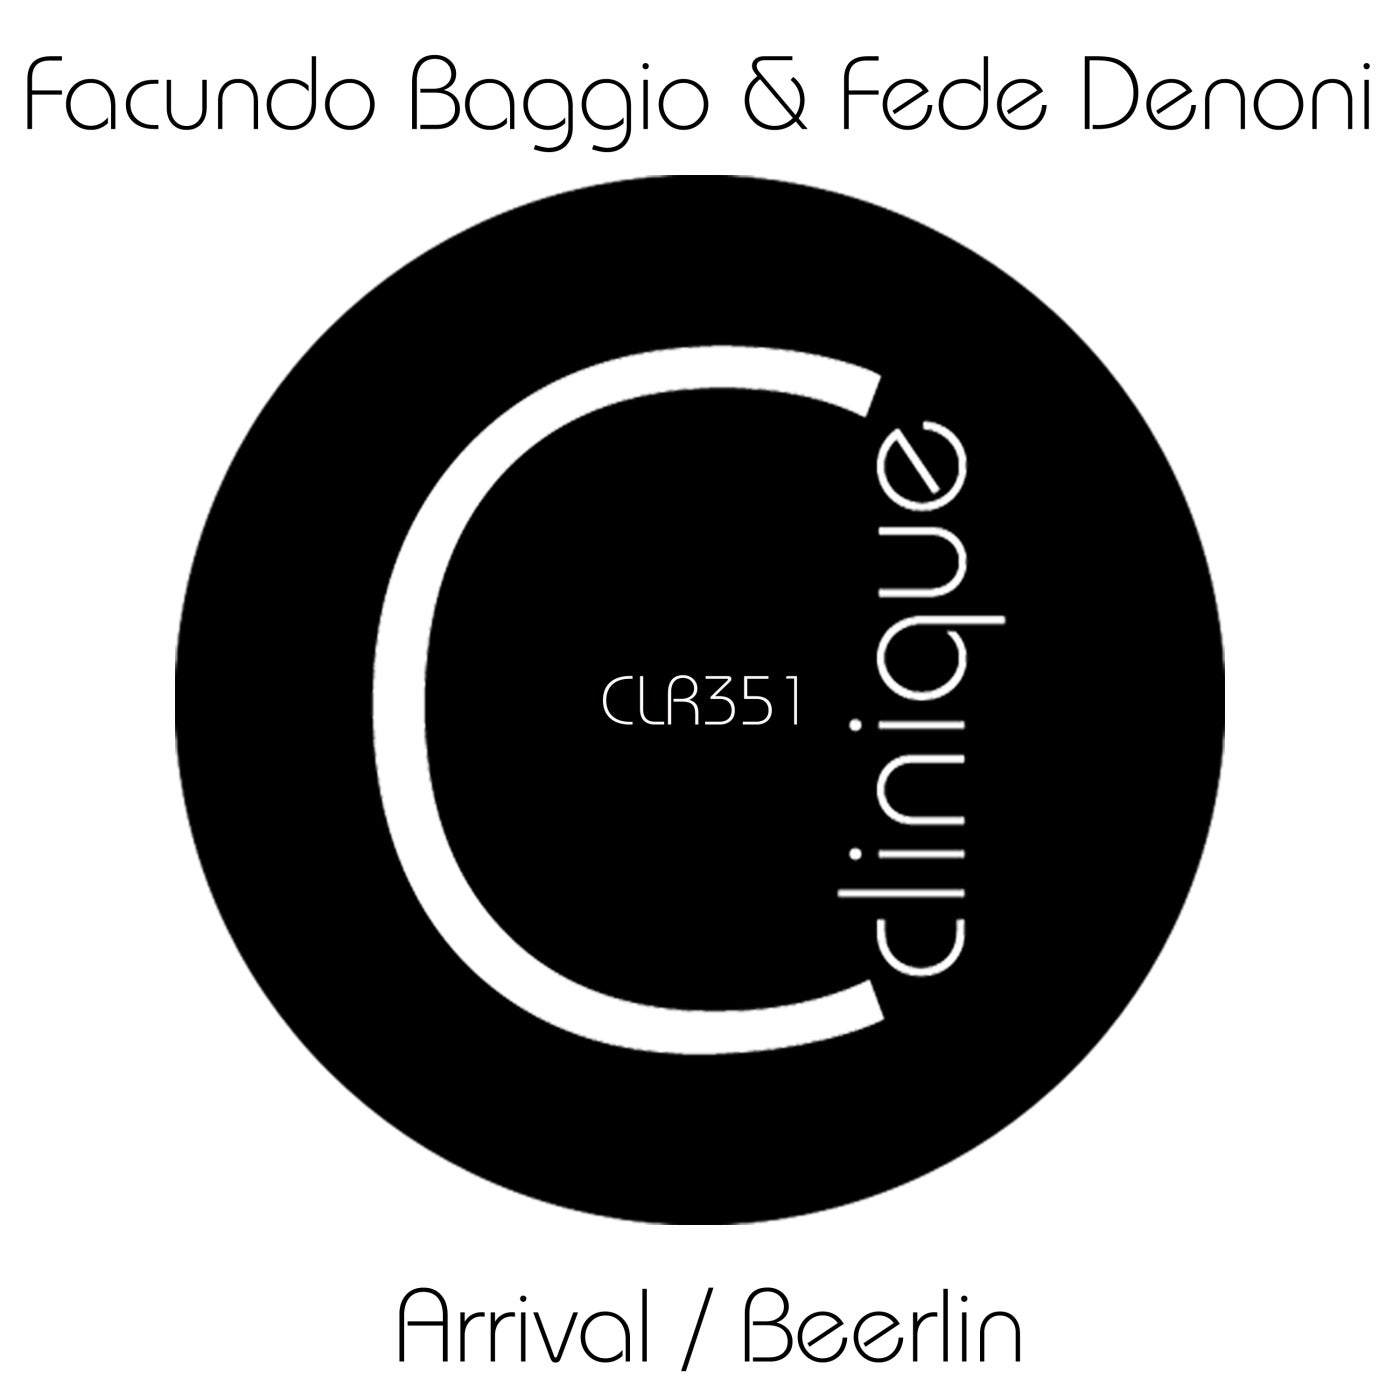 Facundo Baggio, Fede Denoni – Arrival / Beerlin [CLR351]